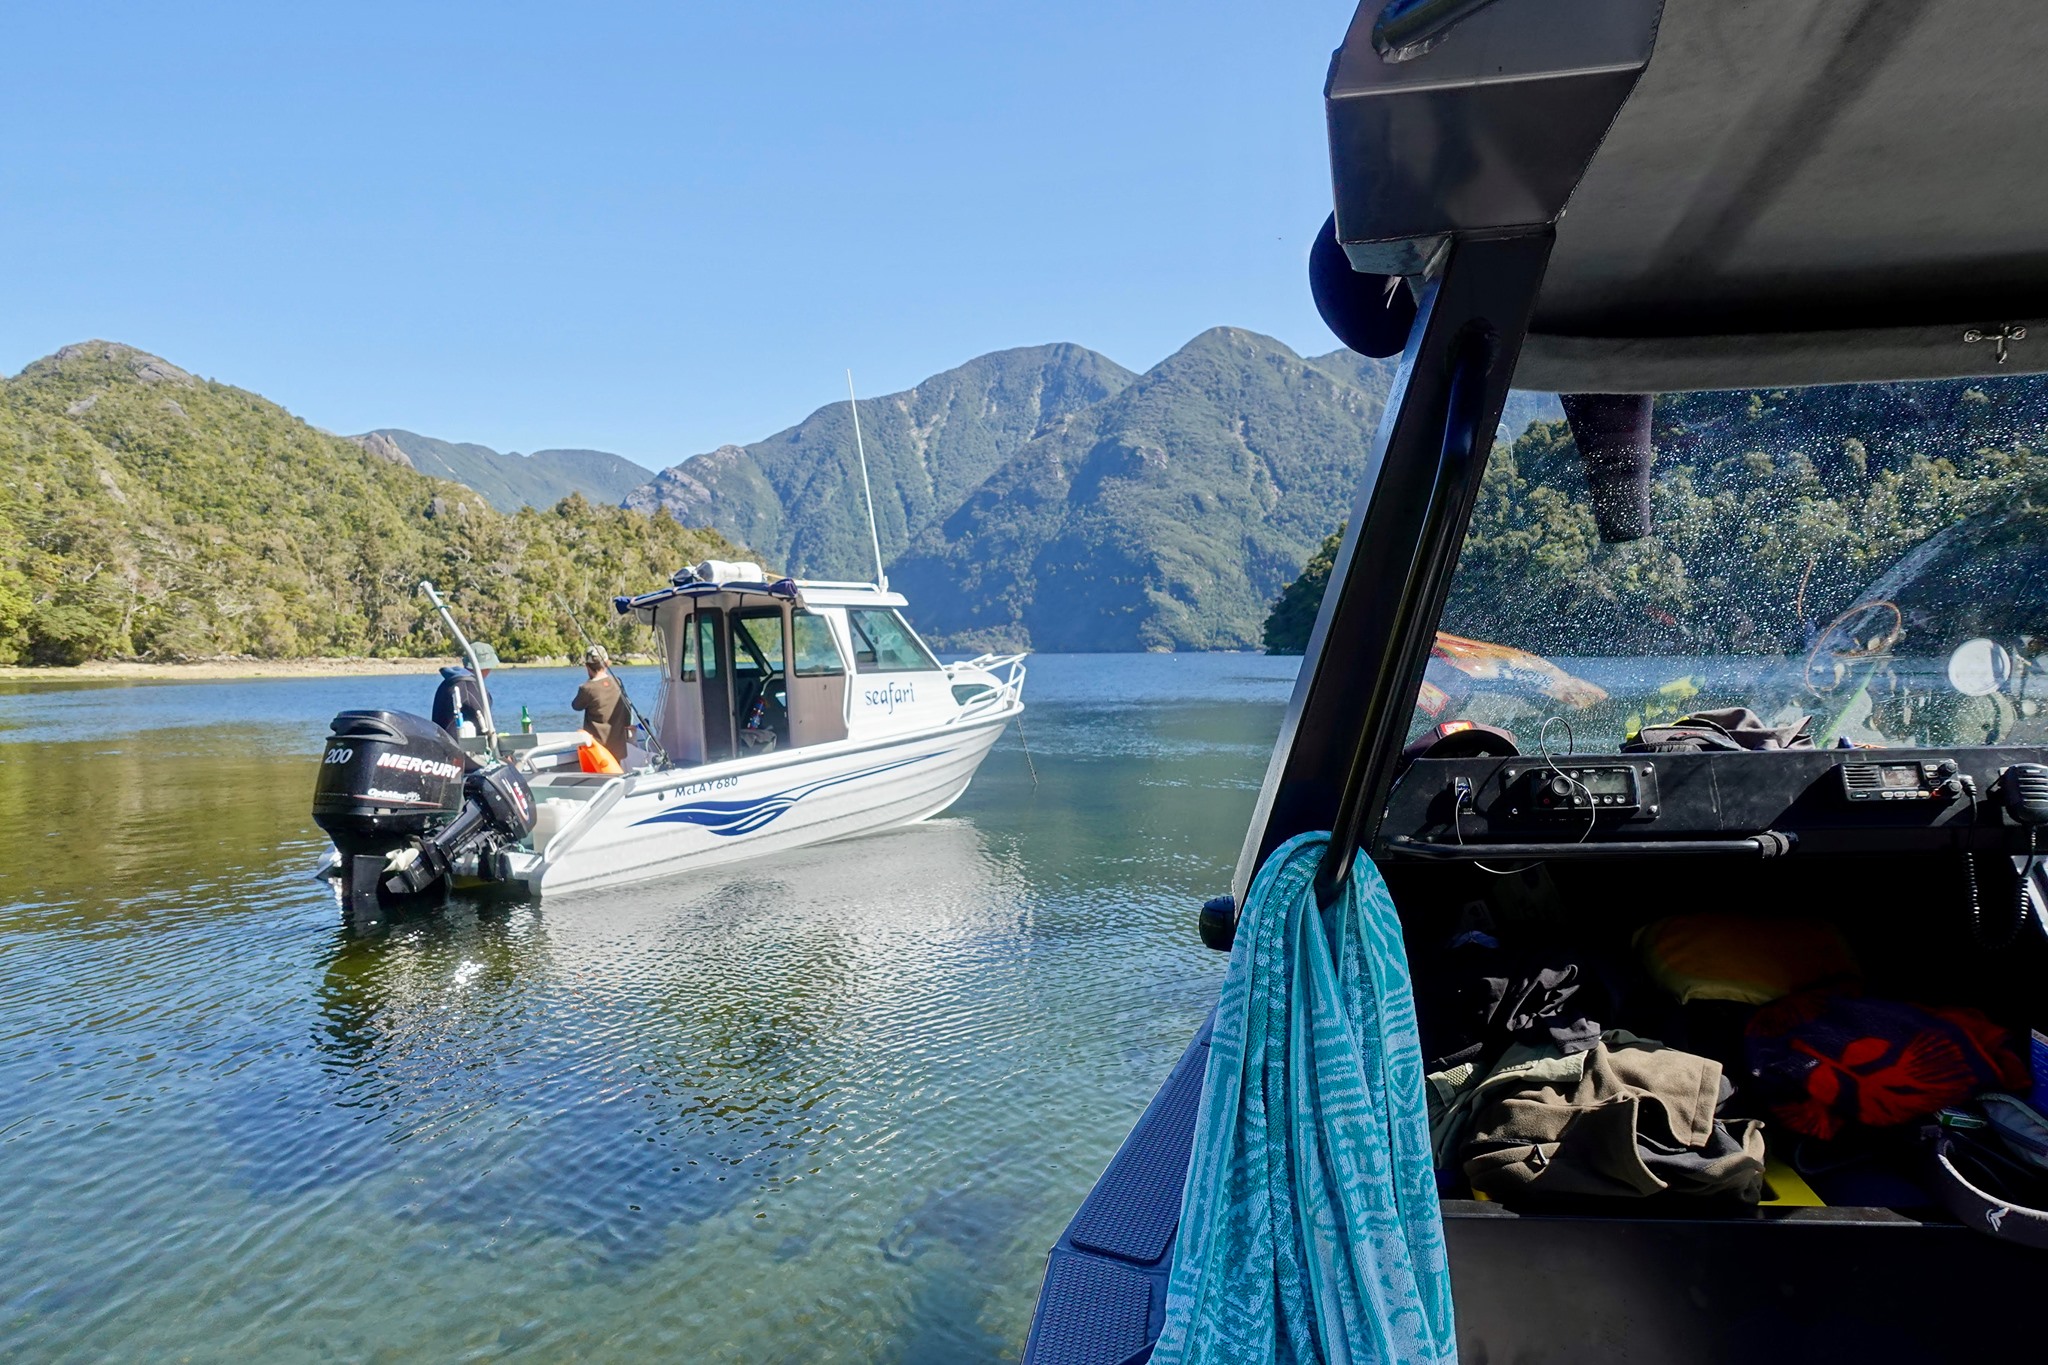 Fishers in Fiordland. Credit: Baden Alber